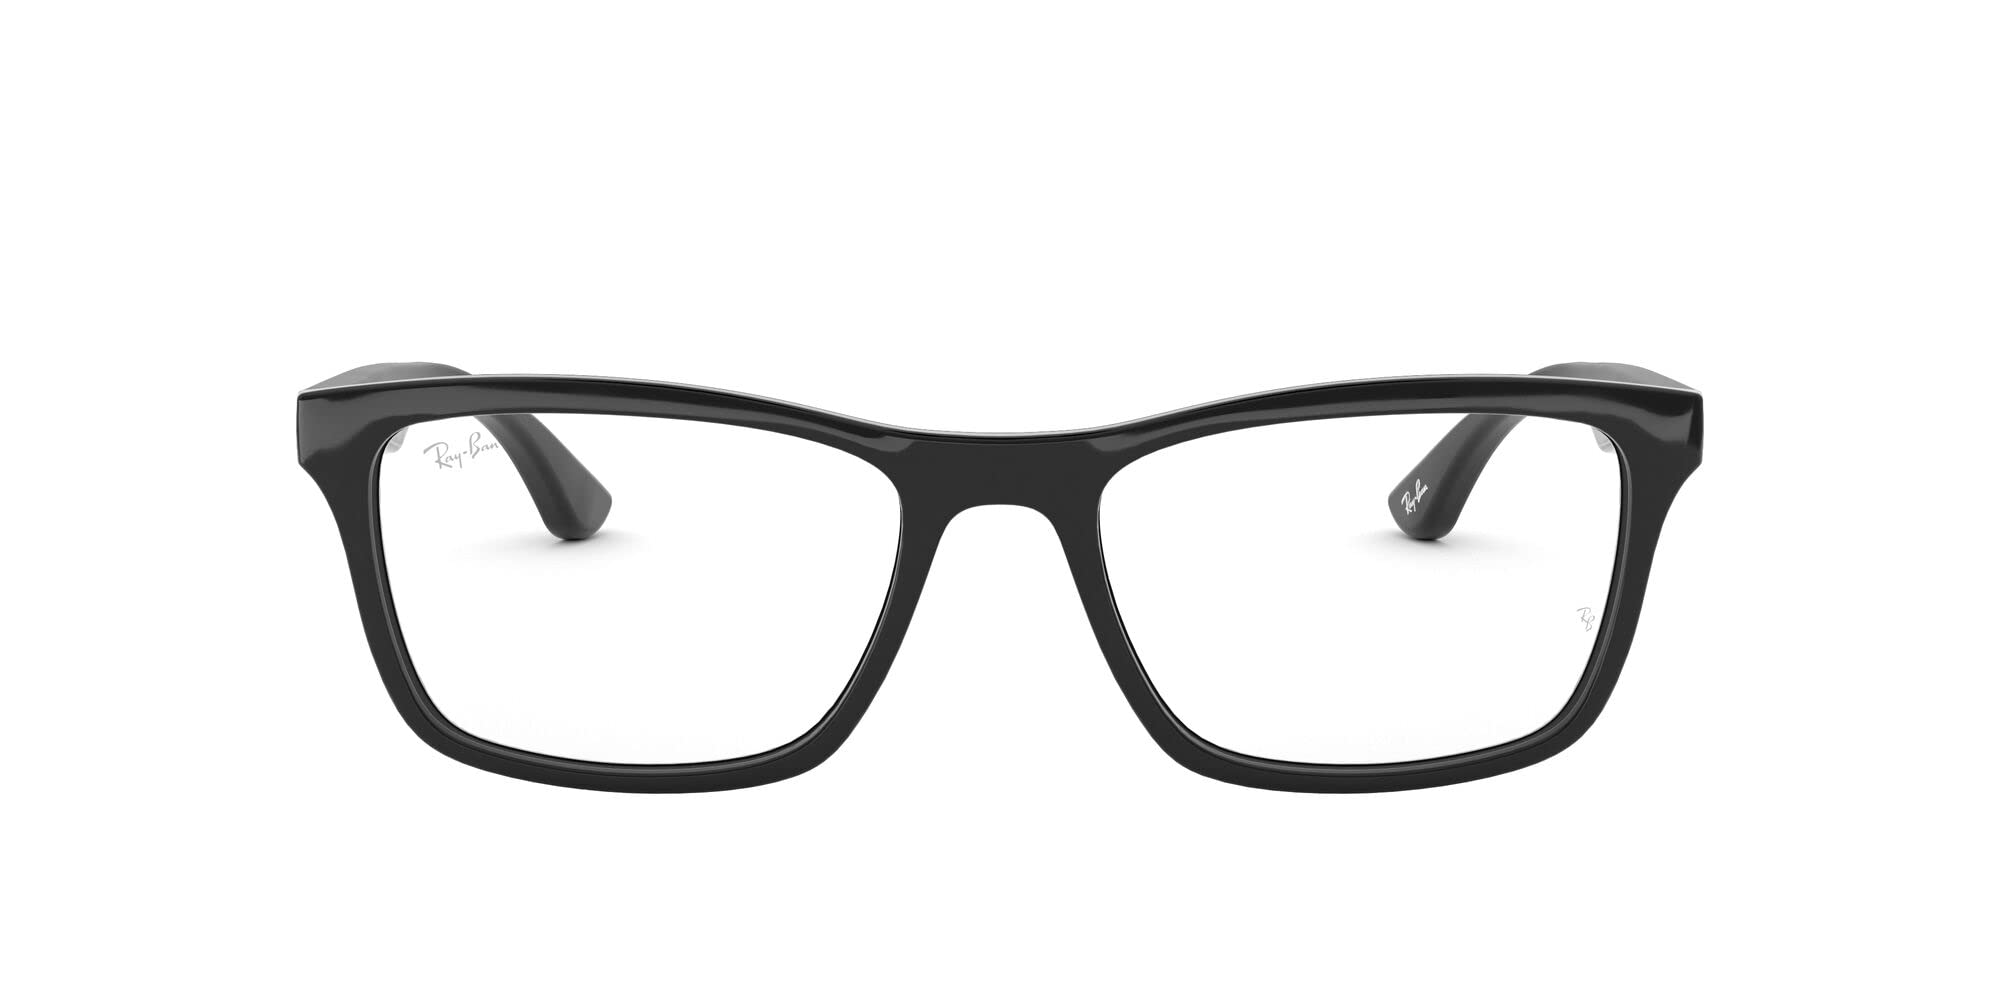 Ray-Ban Rx5279 Square Prescription Eyeglass Frames